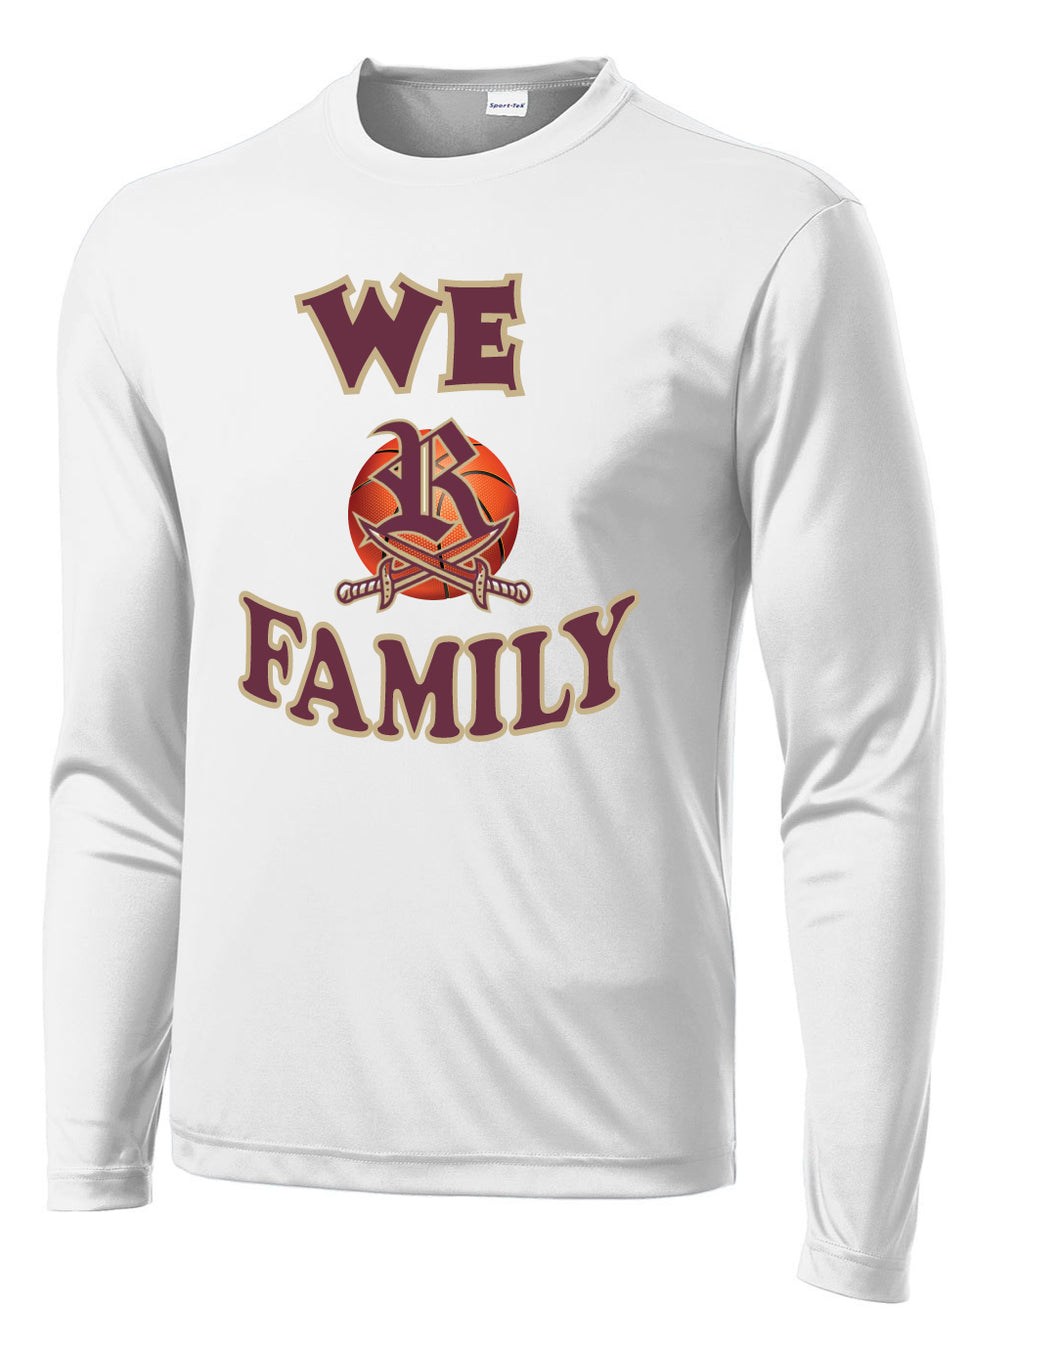 Raider FAMILY Hoops Shirt